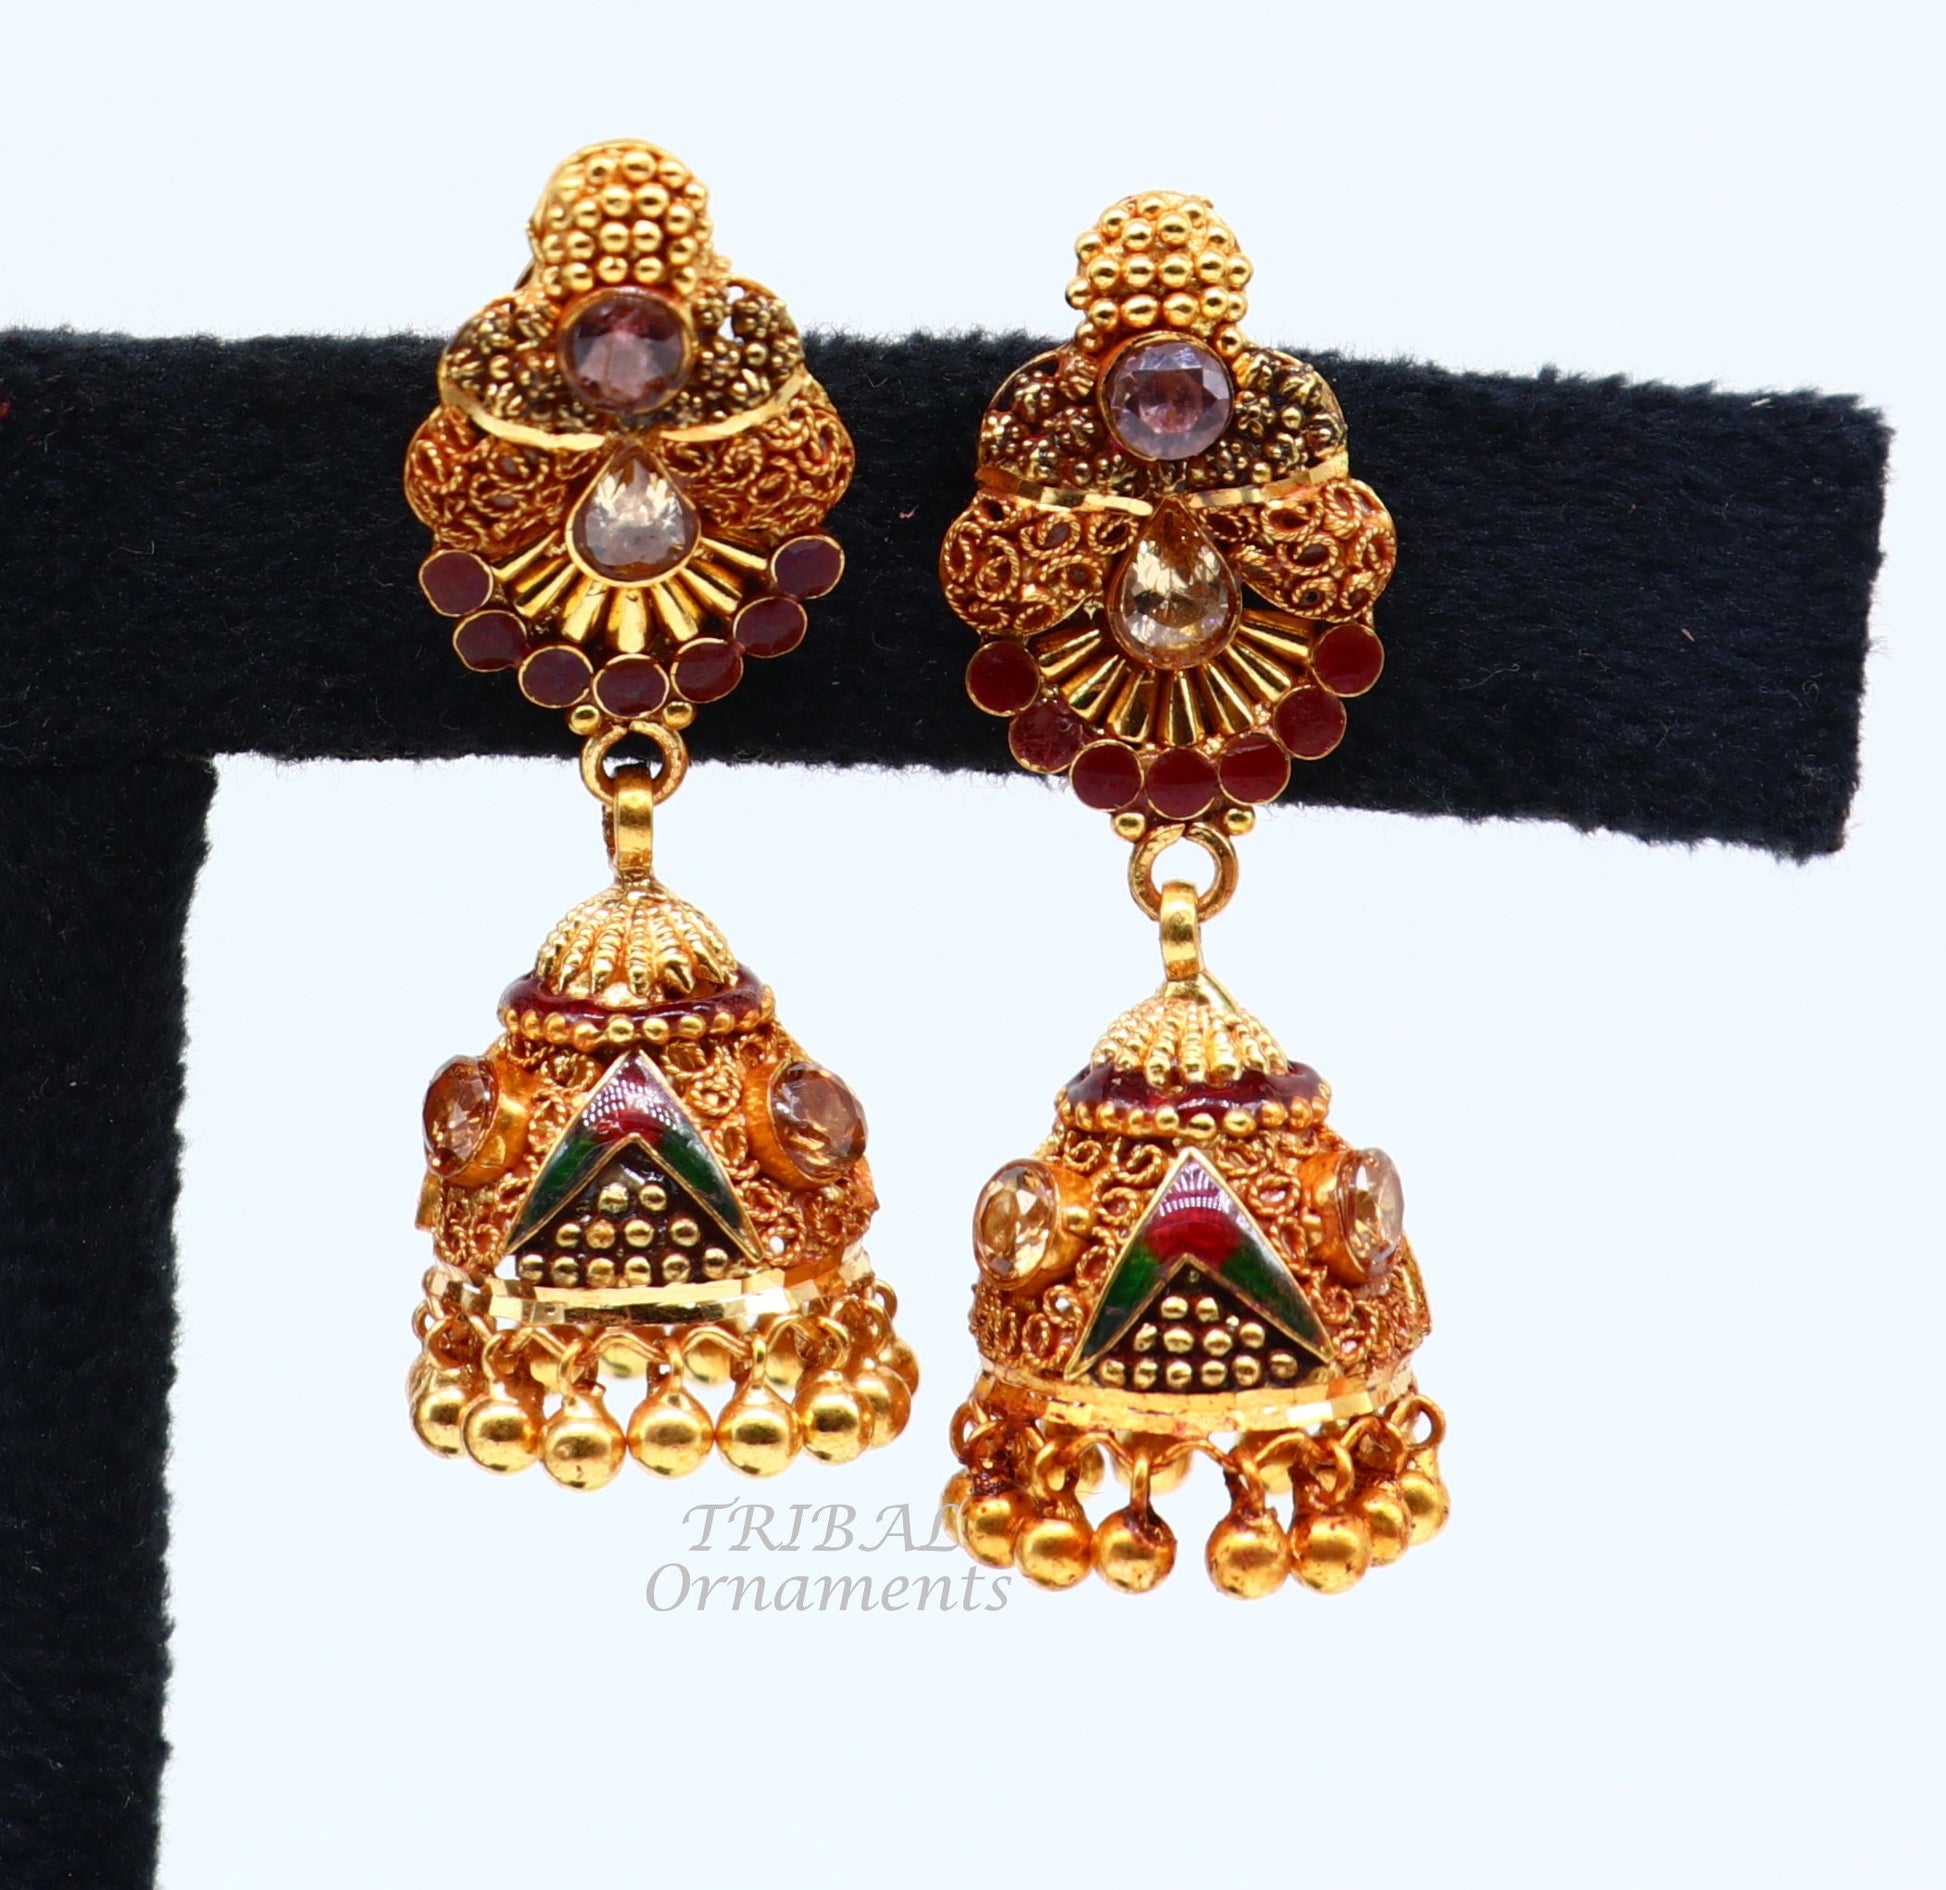 22k yellow gold fabulous handmade filigree work antique designer stud earrings brides wedding jewelry from Rajasthan India er161 - TRIBAL ORNAMENTS